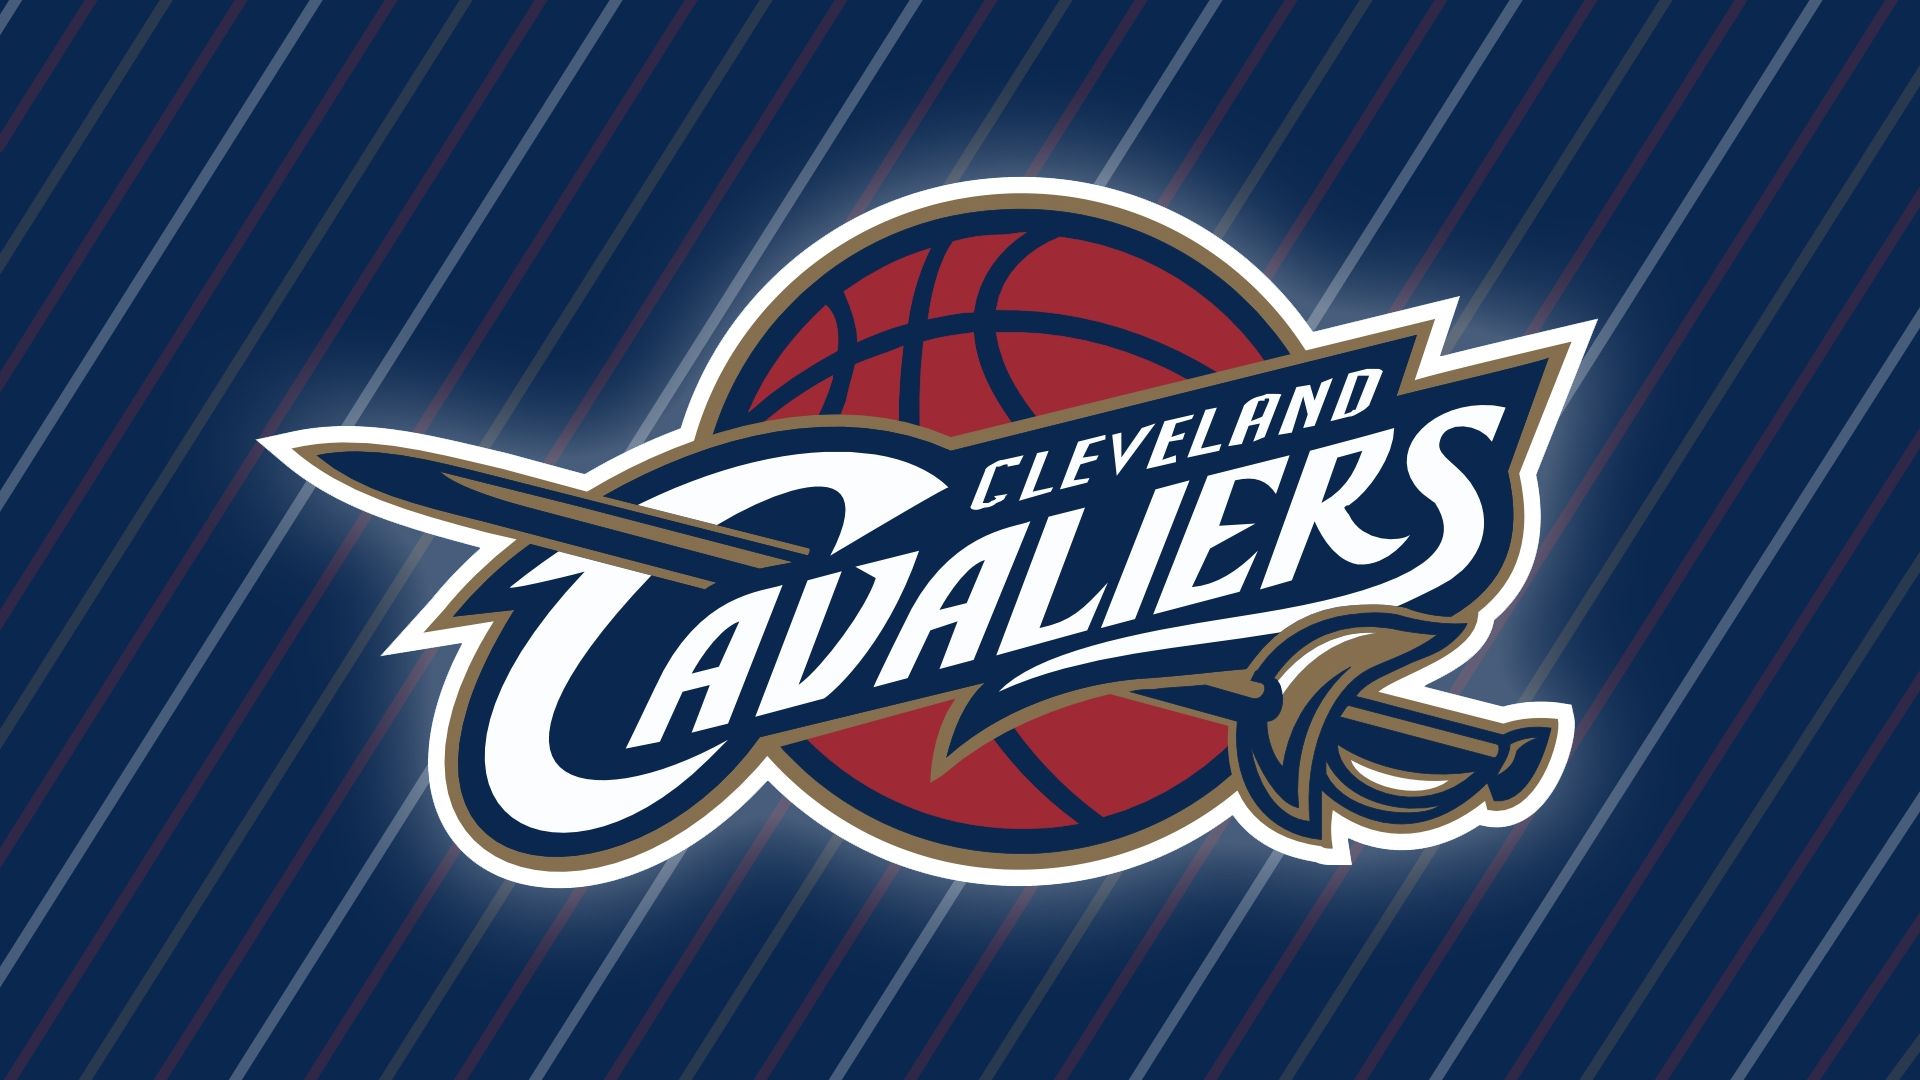 Wallpaper Cleveland Cavaliers team logo